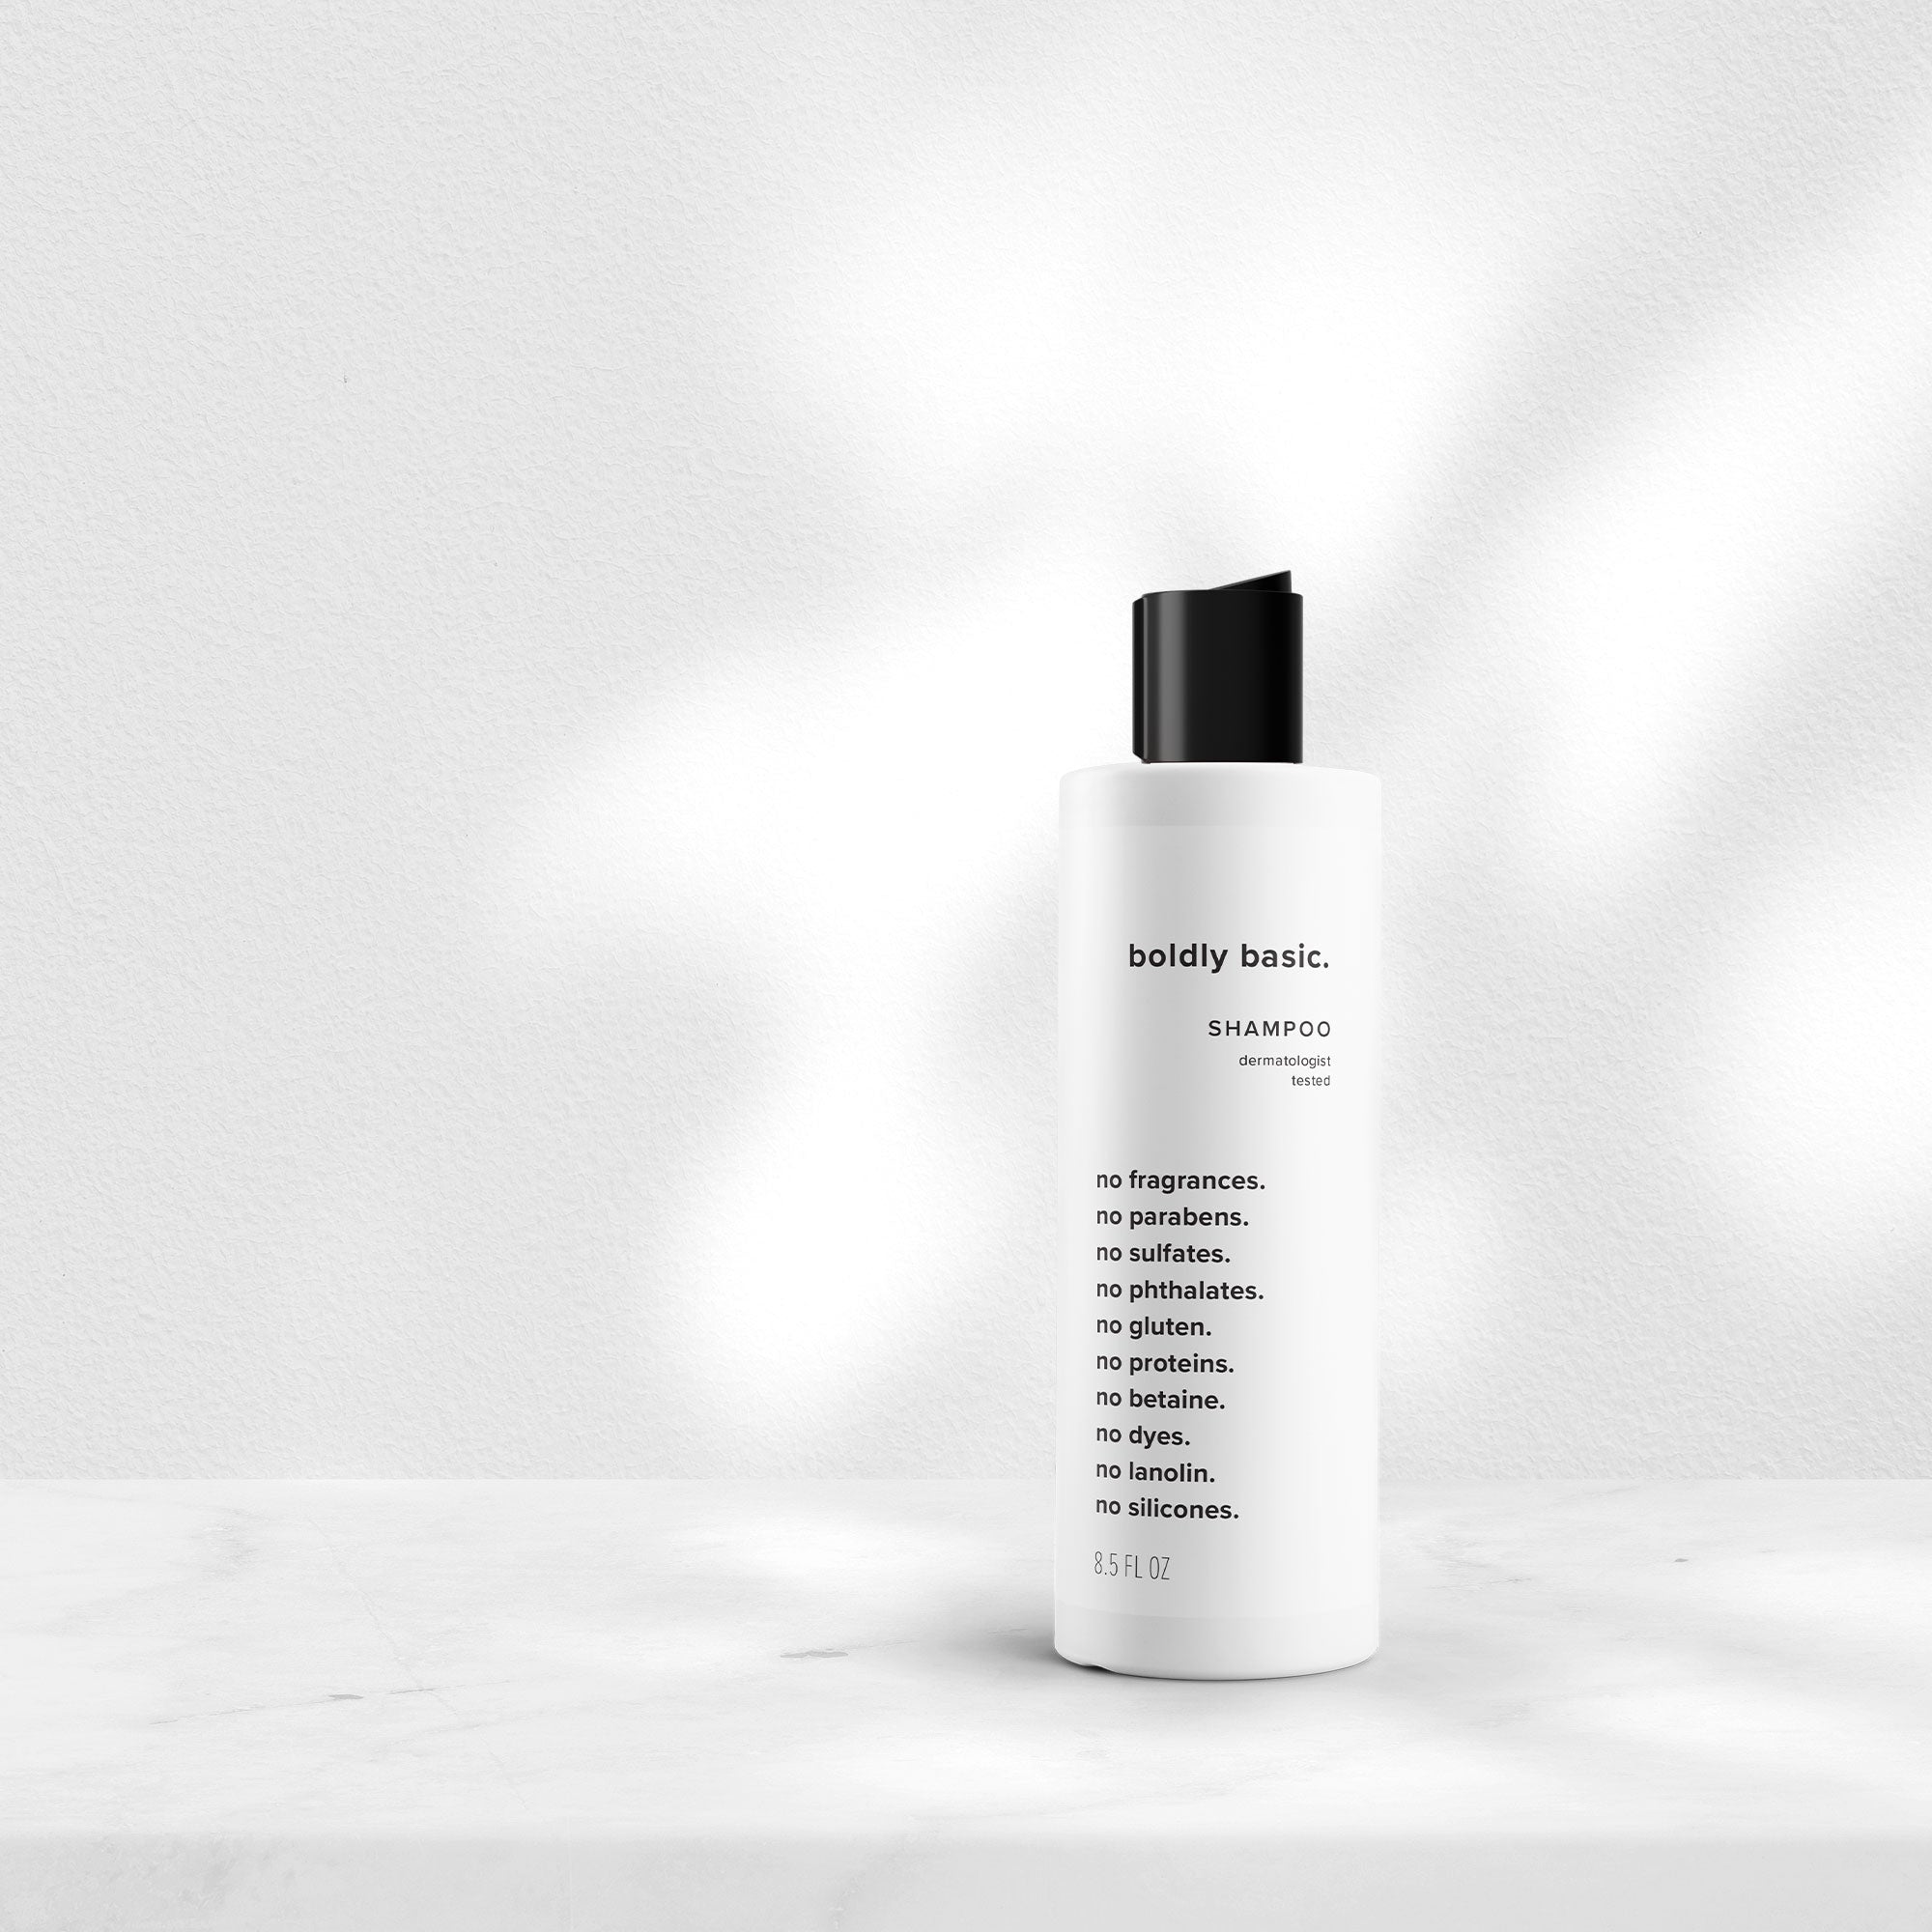 karolina krol studio boldly basic minimalist no parabens no toxins shampoo eco friendly brand packaging design